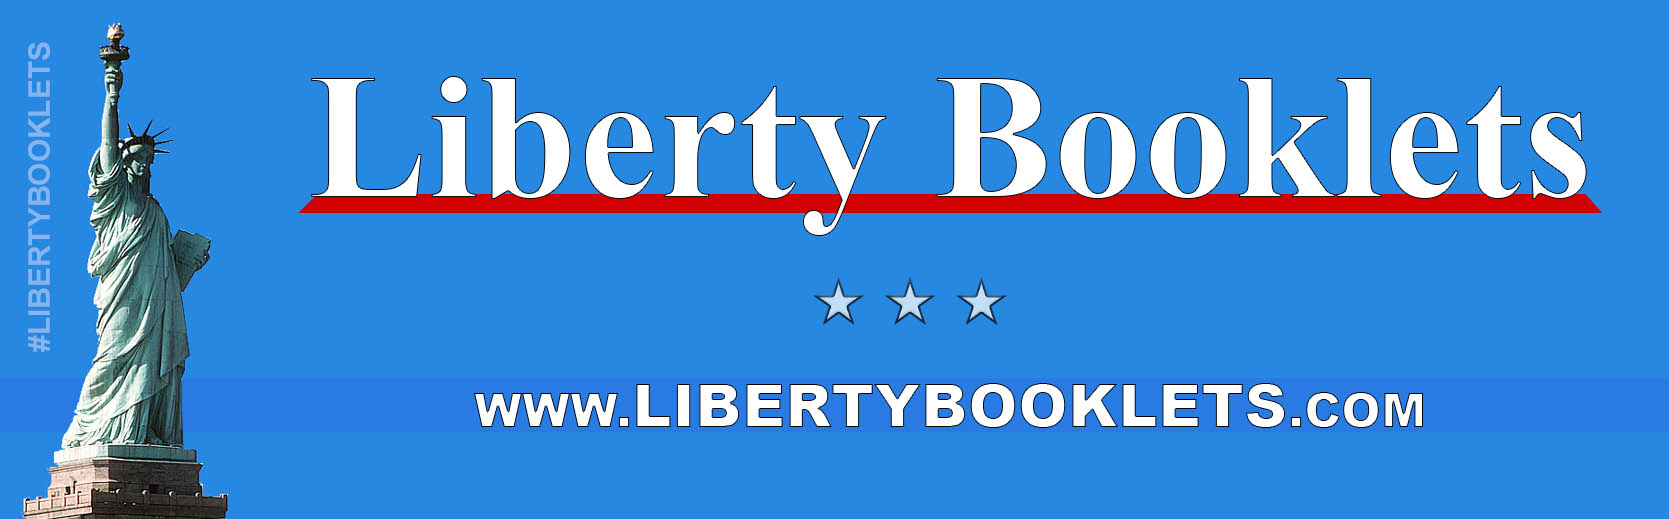 Liberty Booklets Header Image